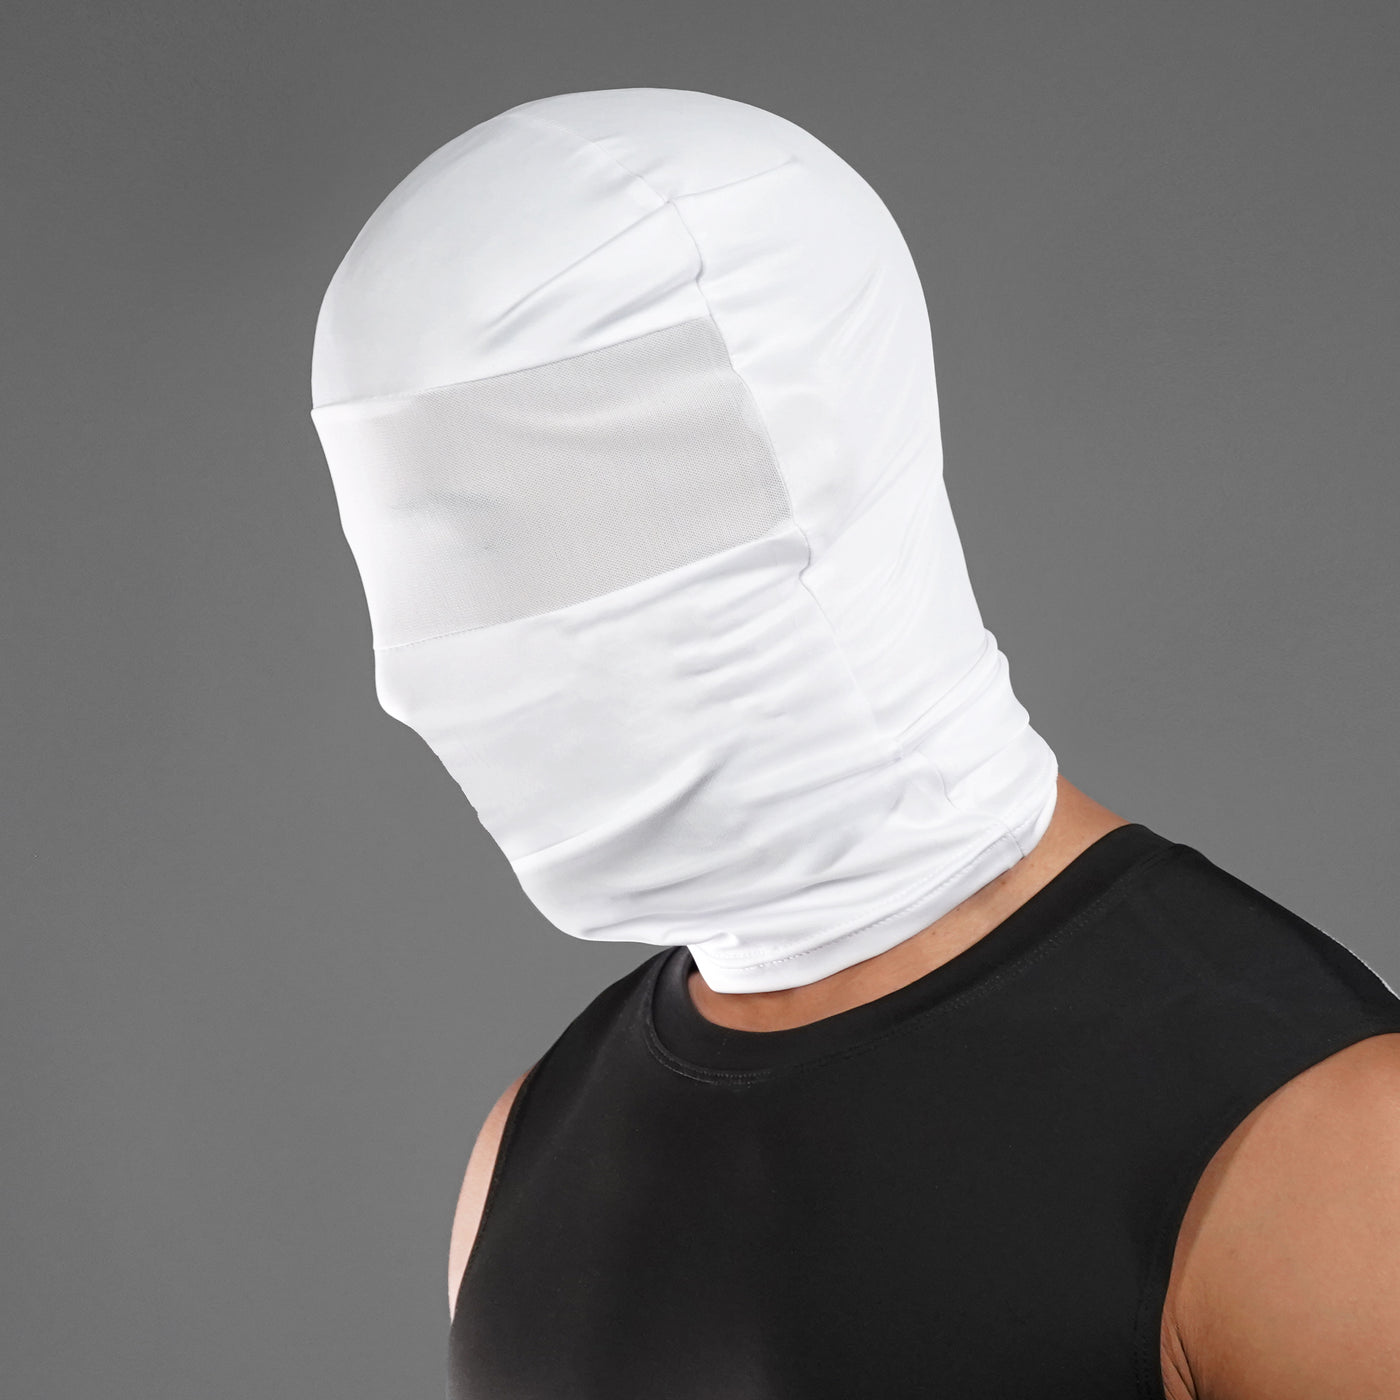 Basic White Head Bag Mask